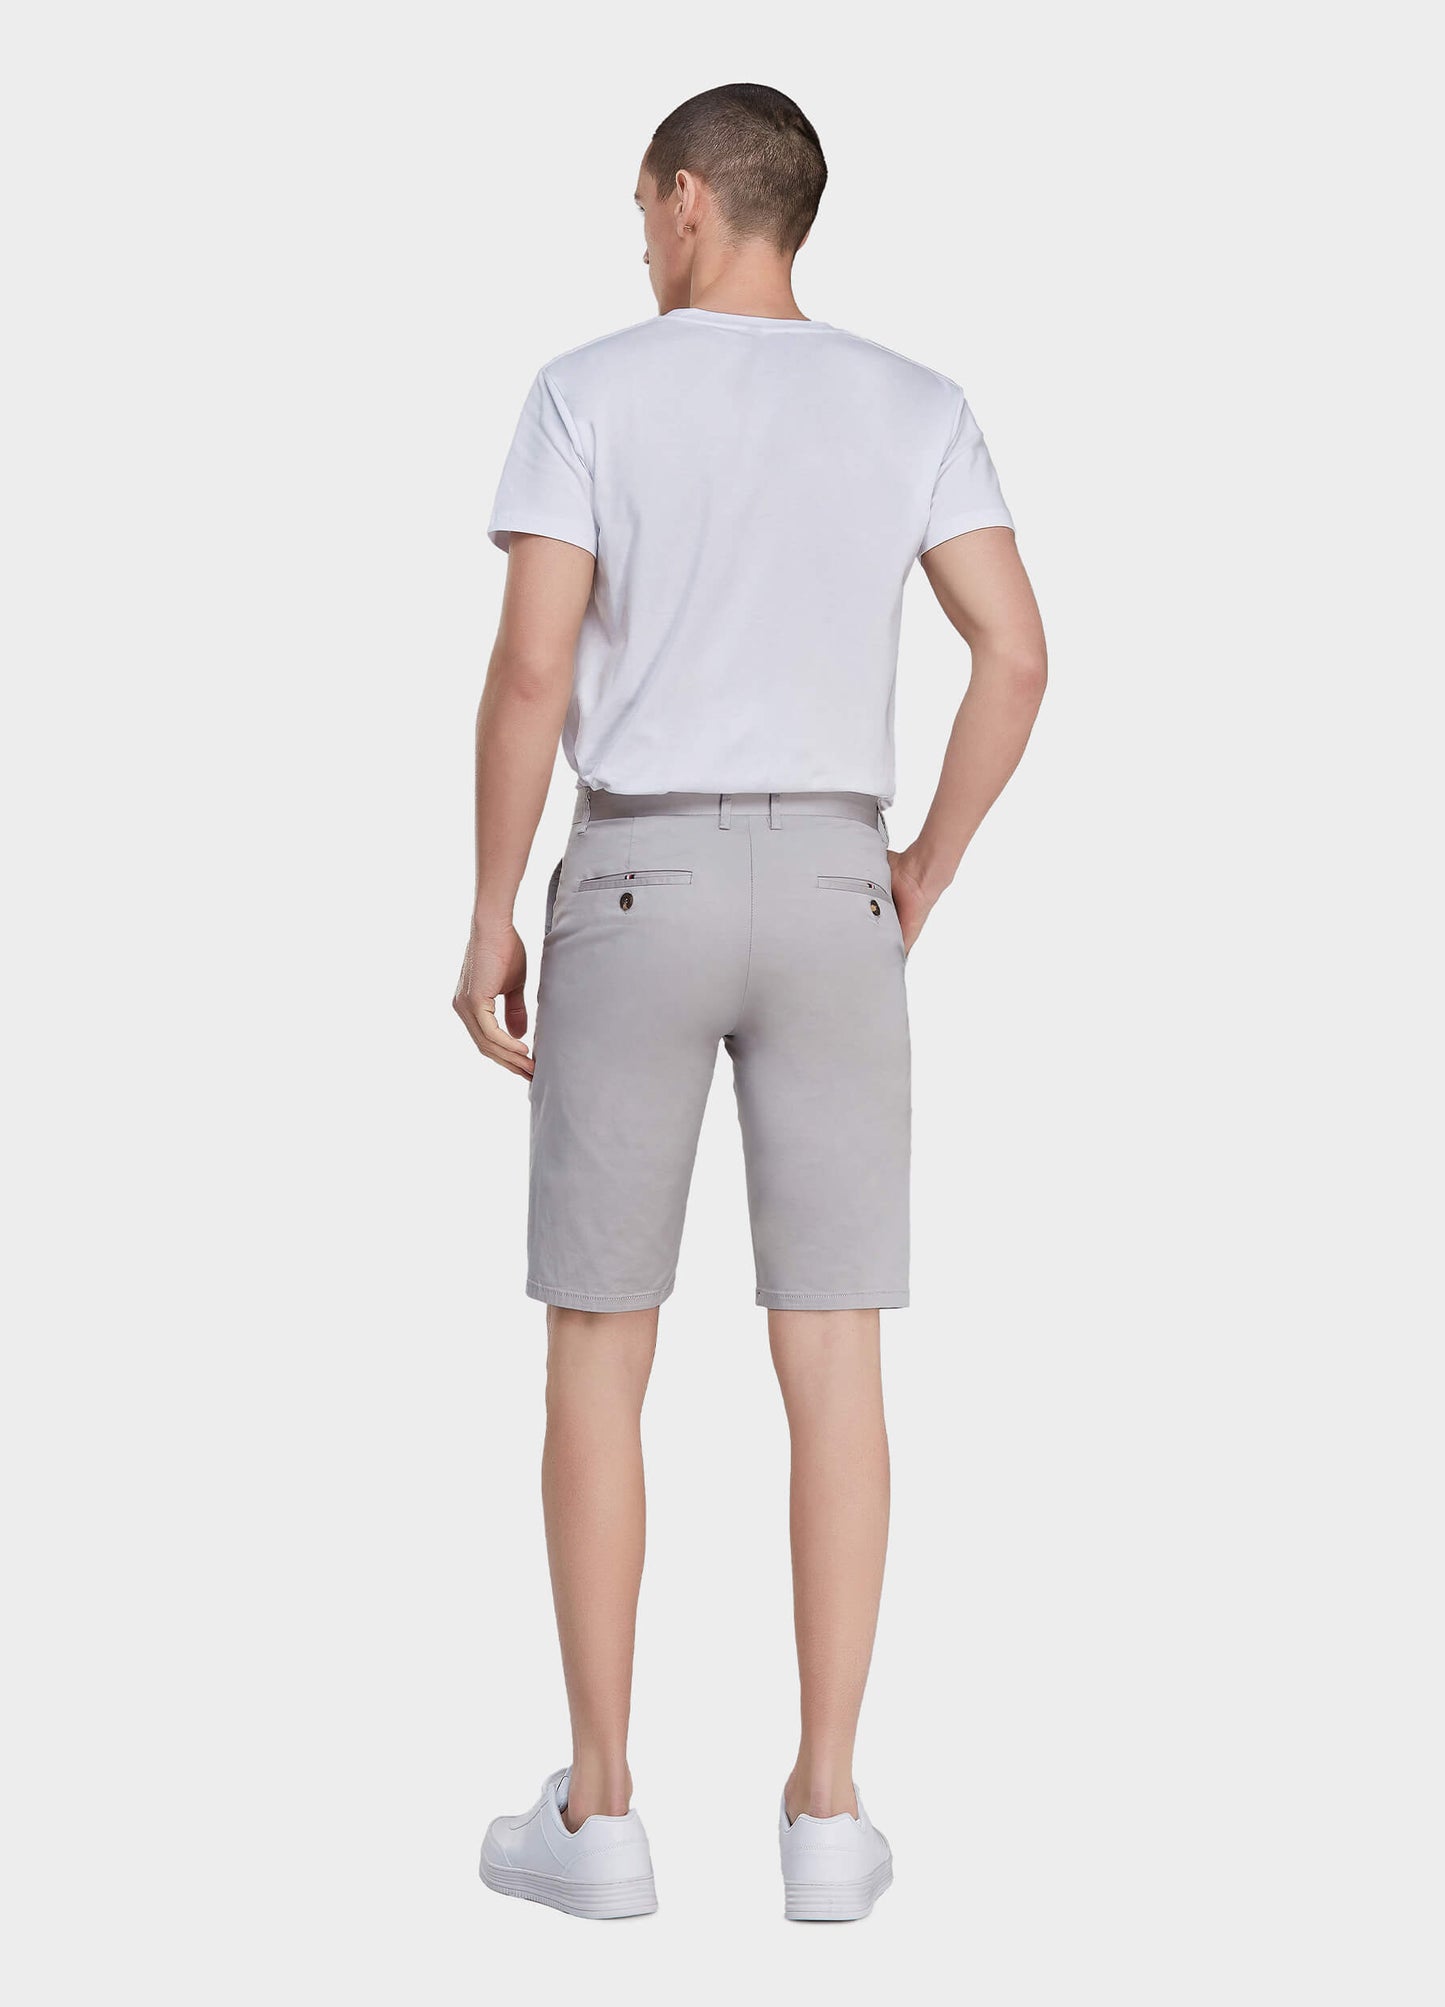 Men's Casual Button Closure Zipper Elasticity Solid Shorts with Slant Pocket-Light Grey back view